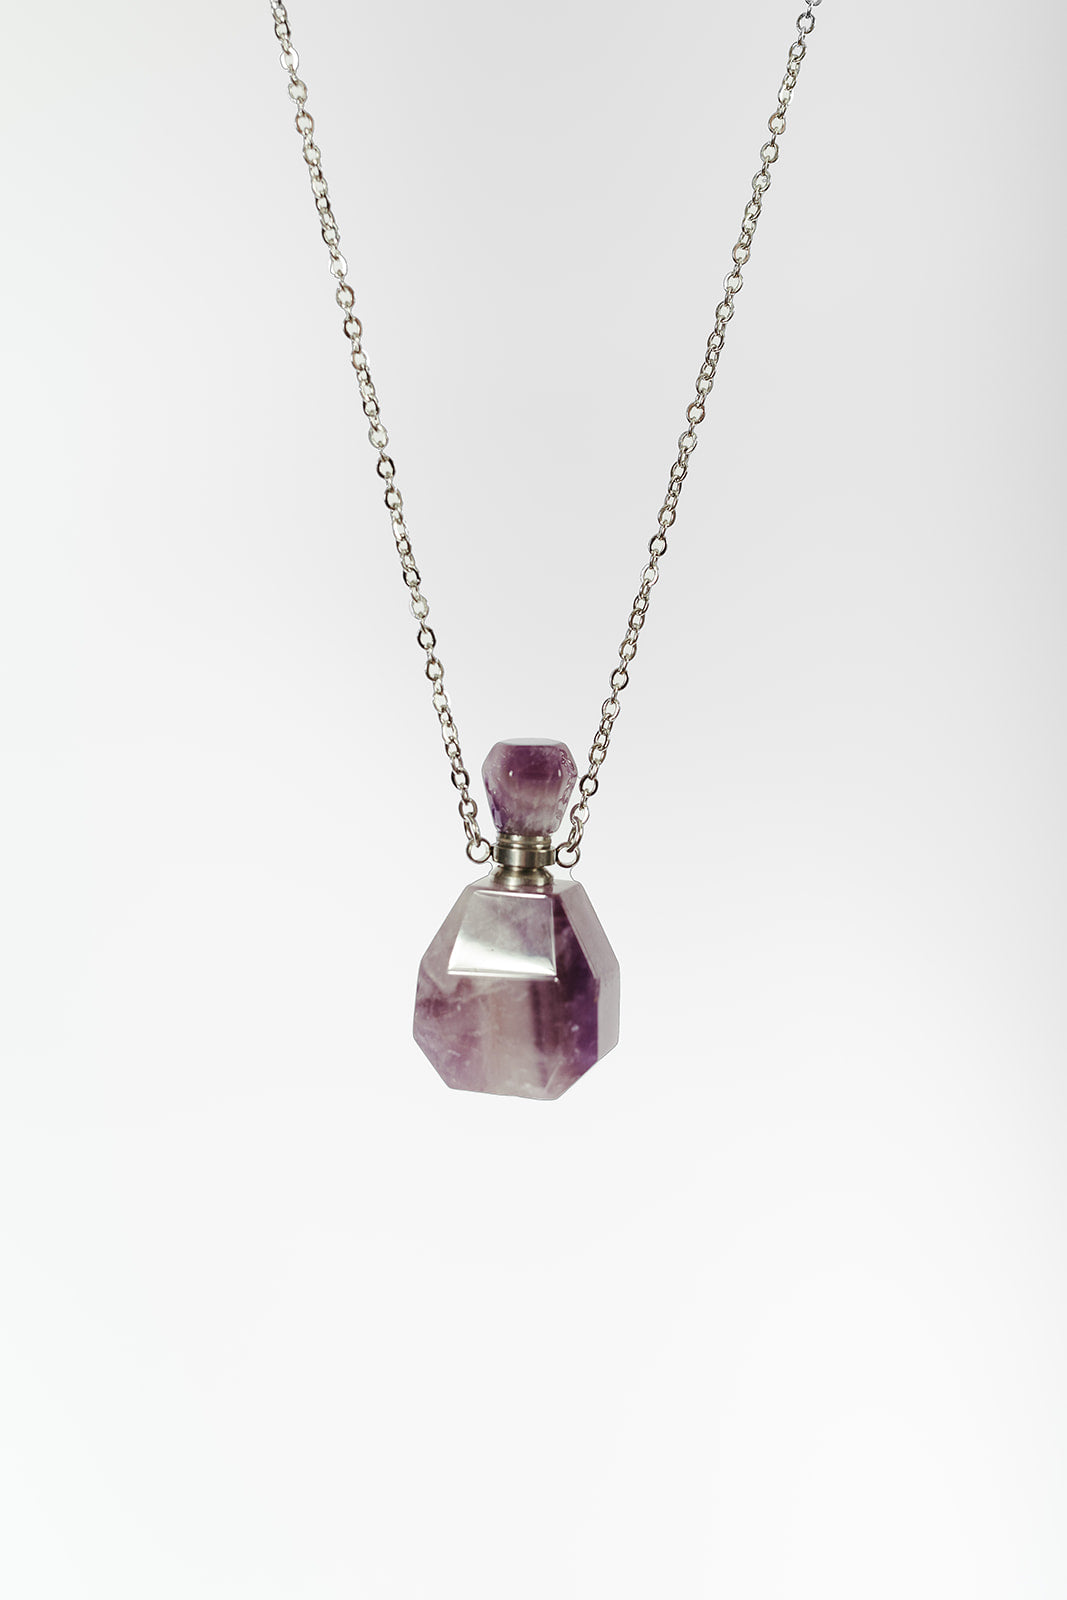 Enchanted Potion Bottle Necklace - Amethyst